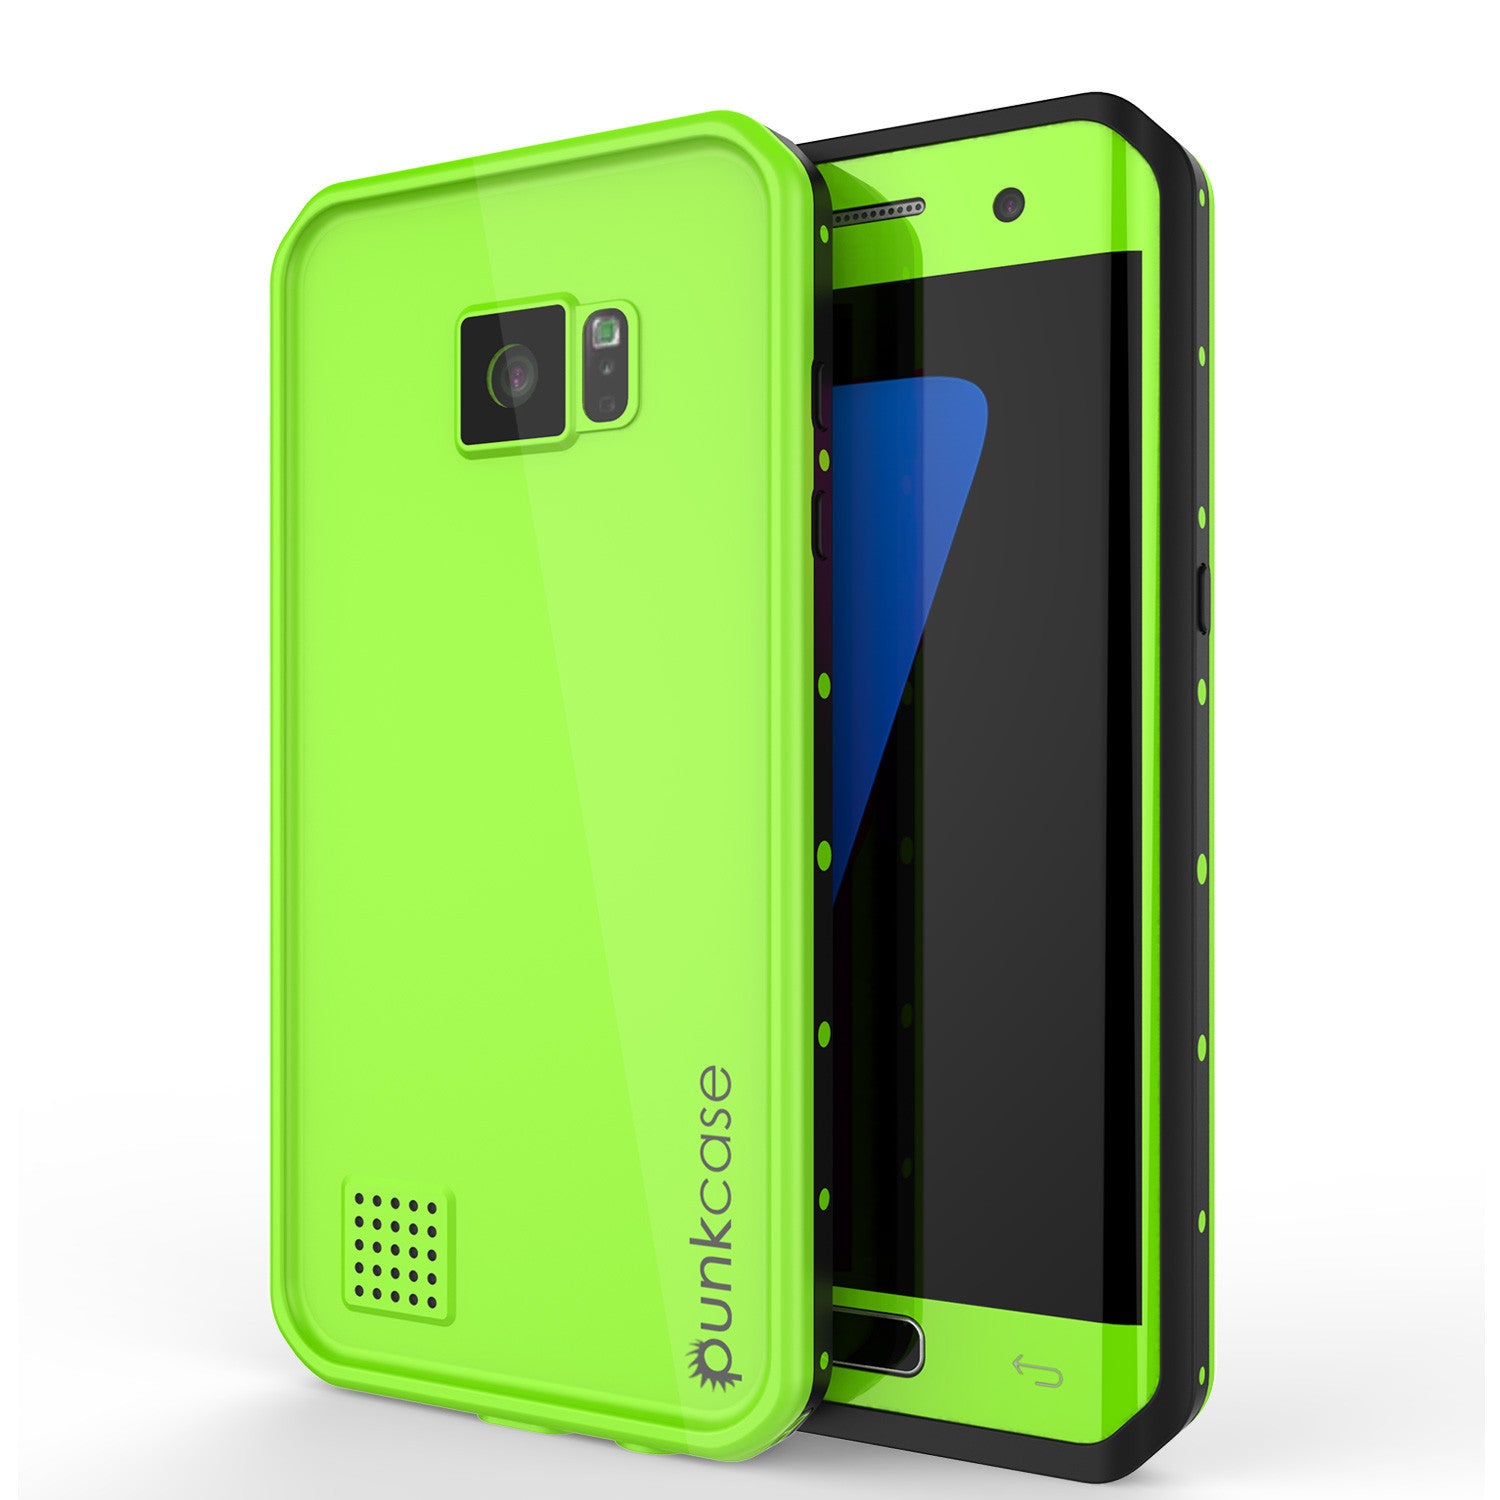 Galaxy S7 EDGE Waterproof Case PunkCase StudStar Light Green Thin 6.6ft Underwater IP68 ShockProof (Color in image: light green)